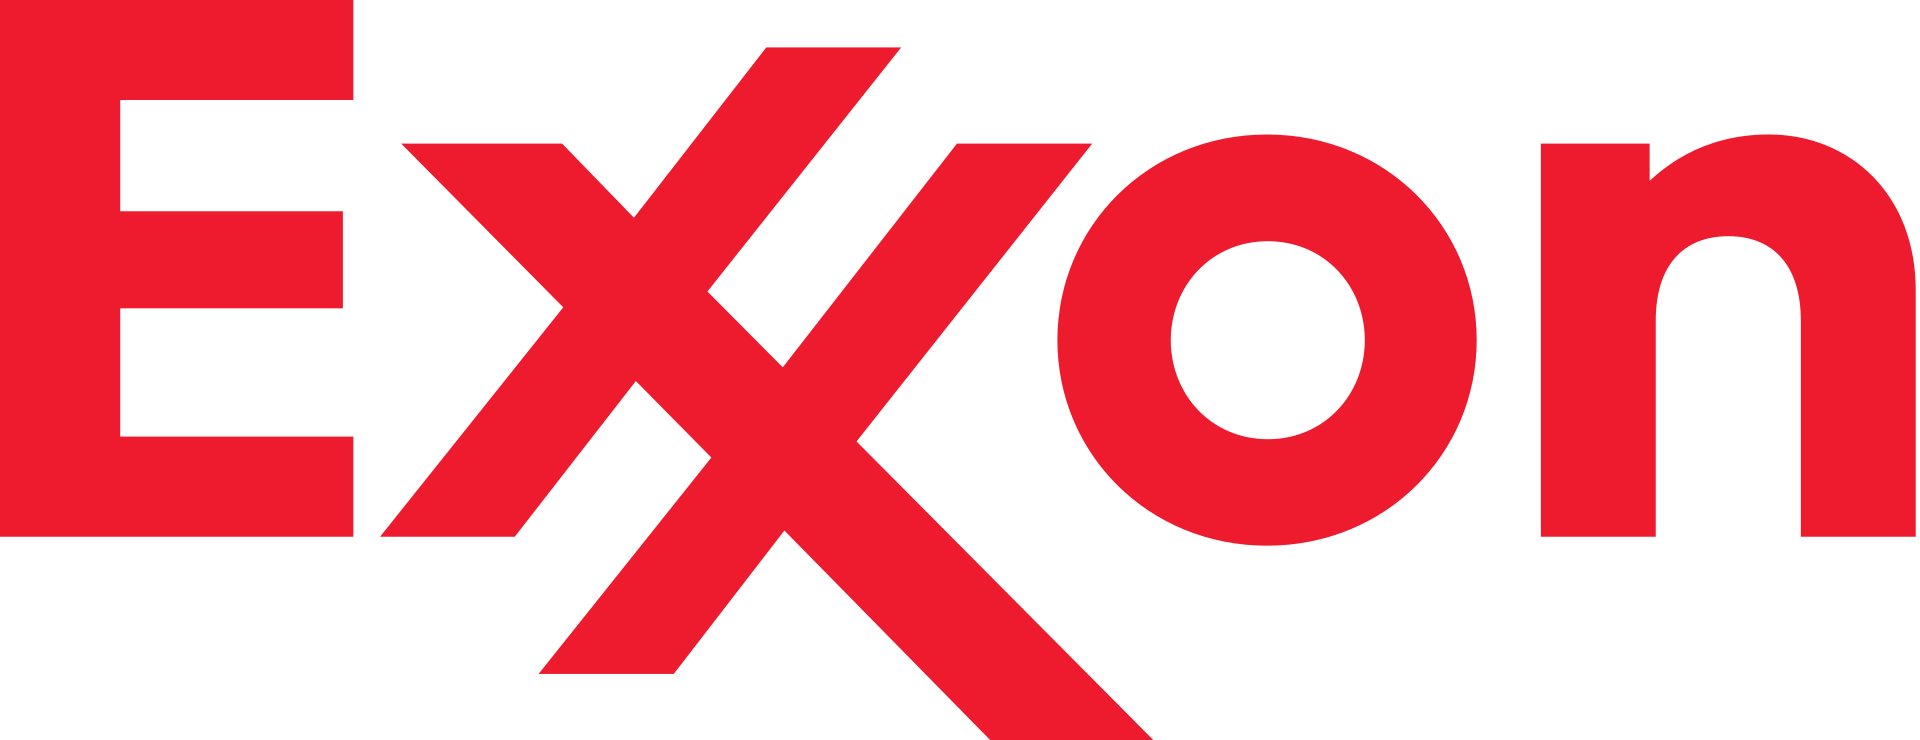 Exxon Brand Logo